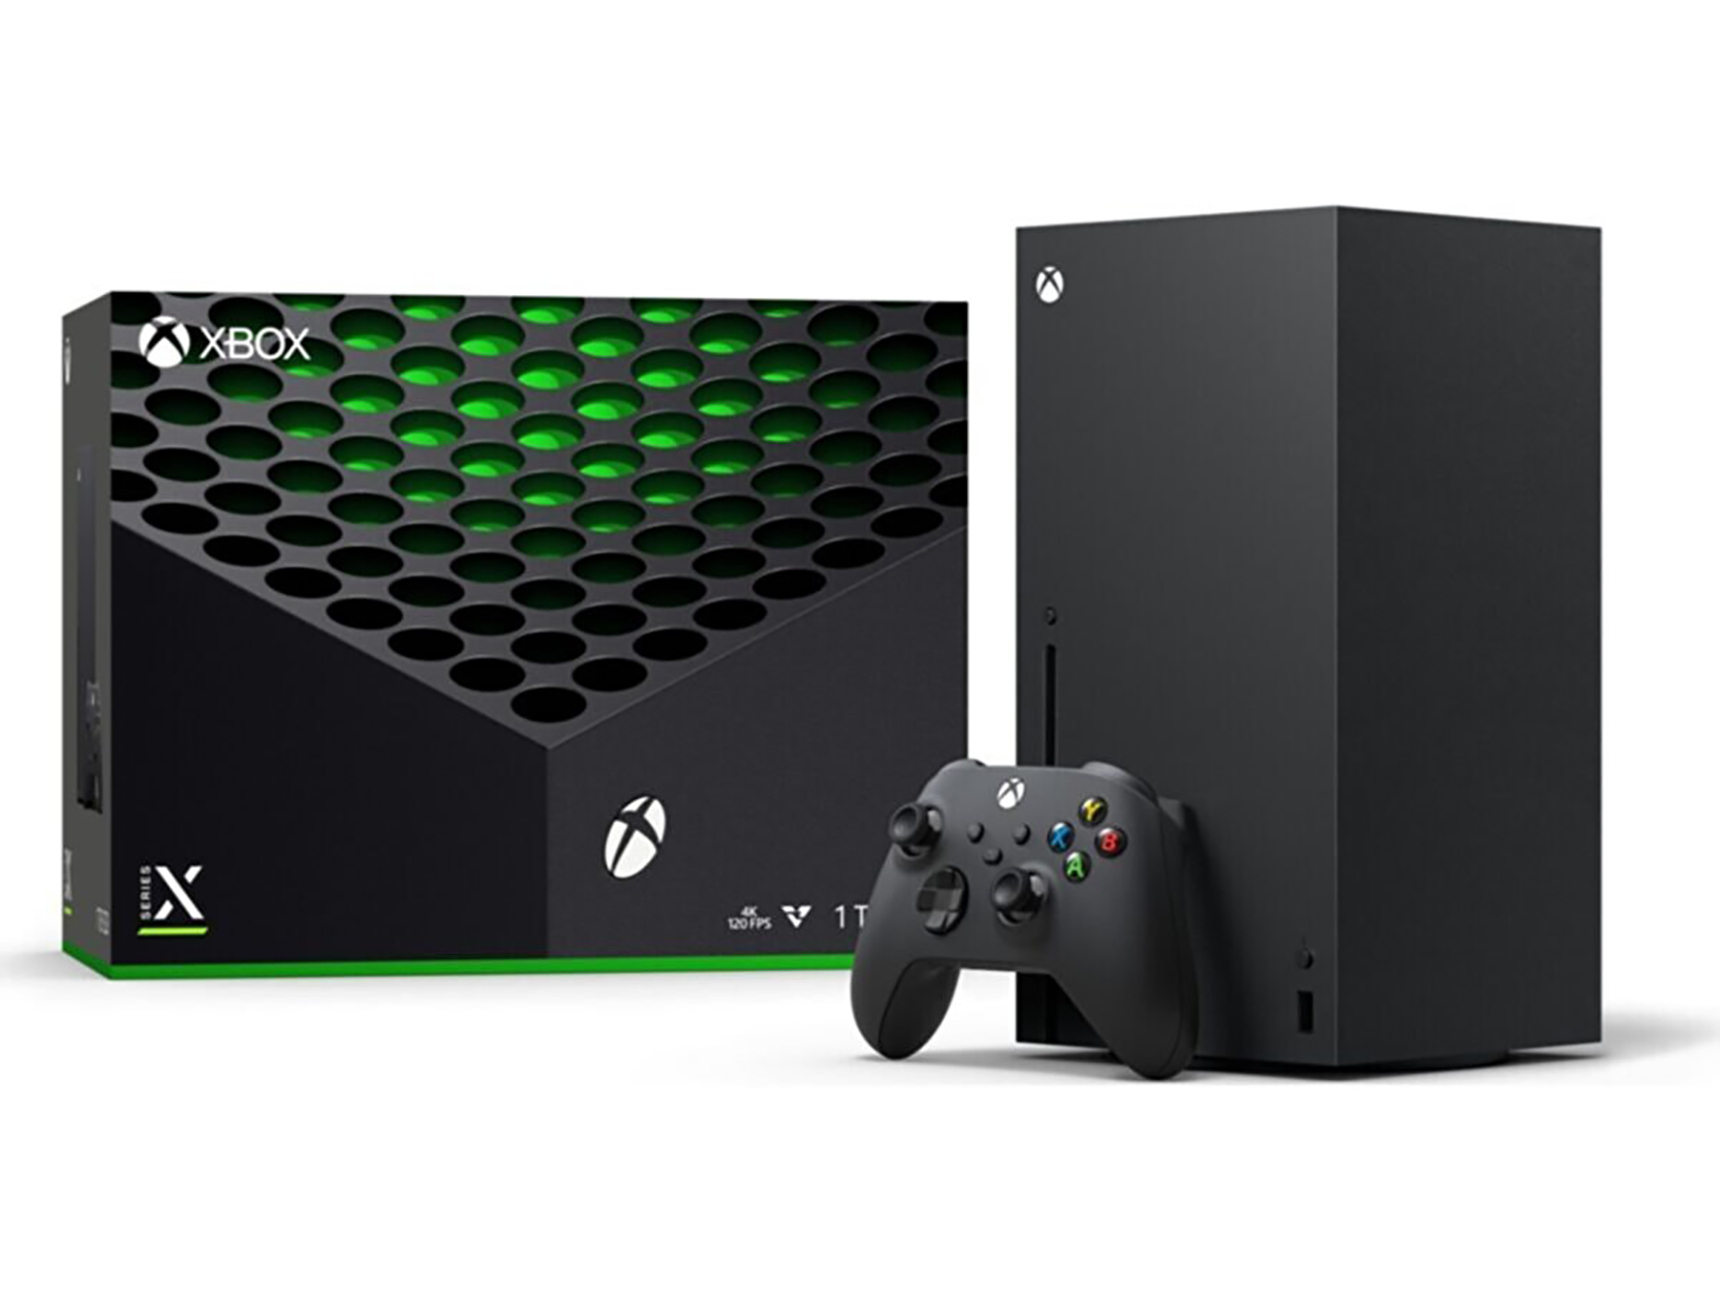 Жесткий xbox купить. Игровая приставка Microsoft Xbox Series x. Microsoft Xbox Series x 1tb. Консоль Microsoft Xbox Series x 1tb (RRT). Хбокс Сериес s.